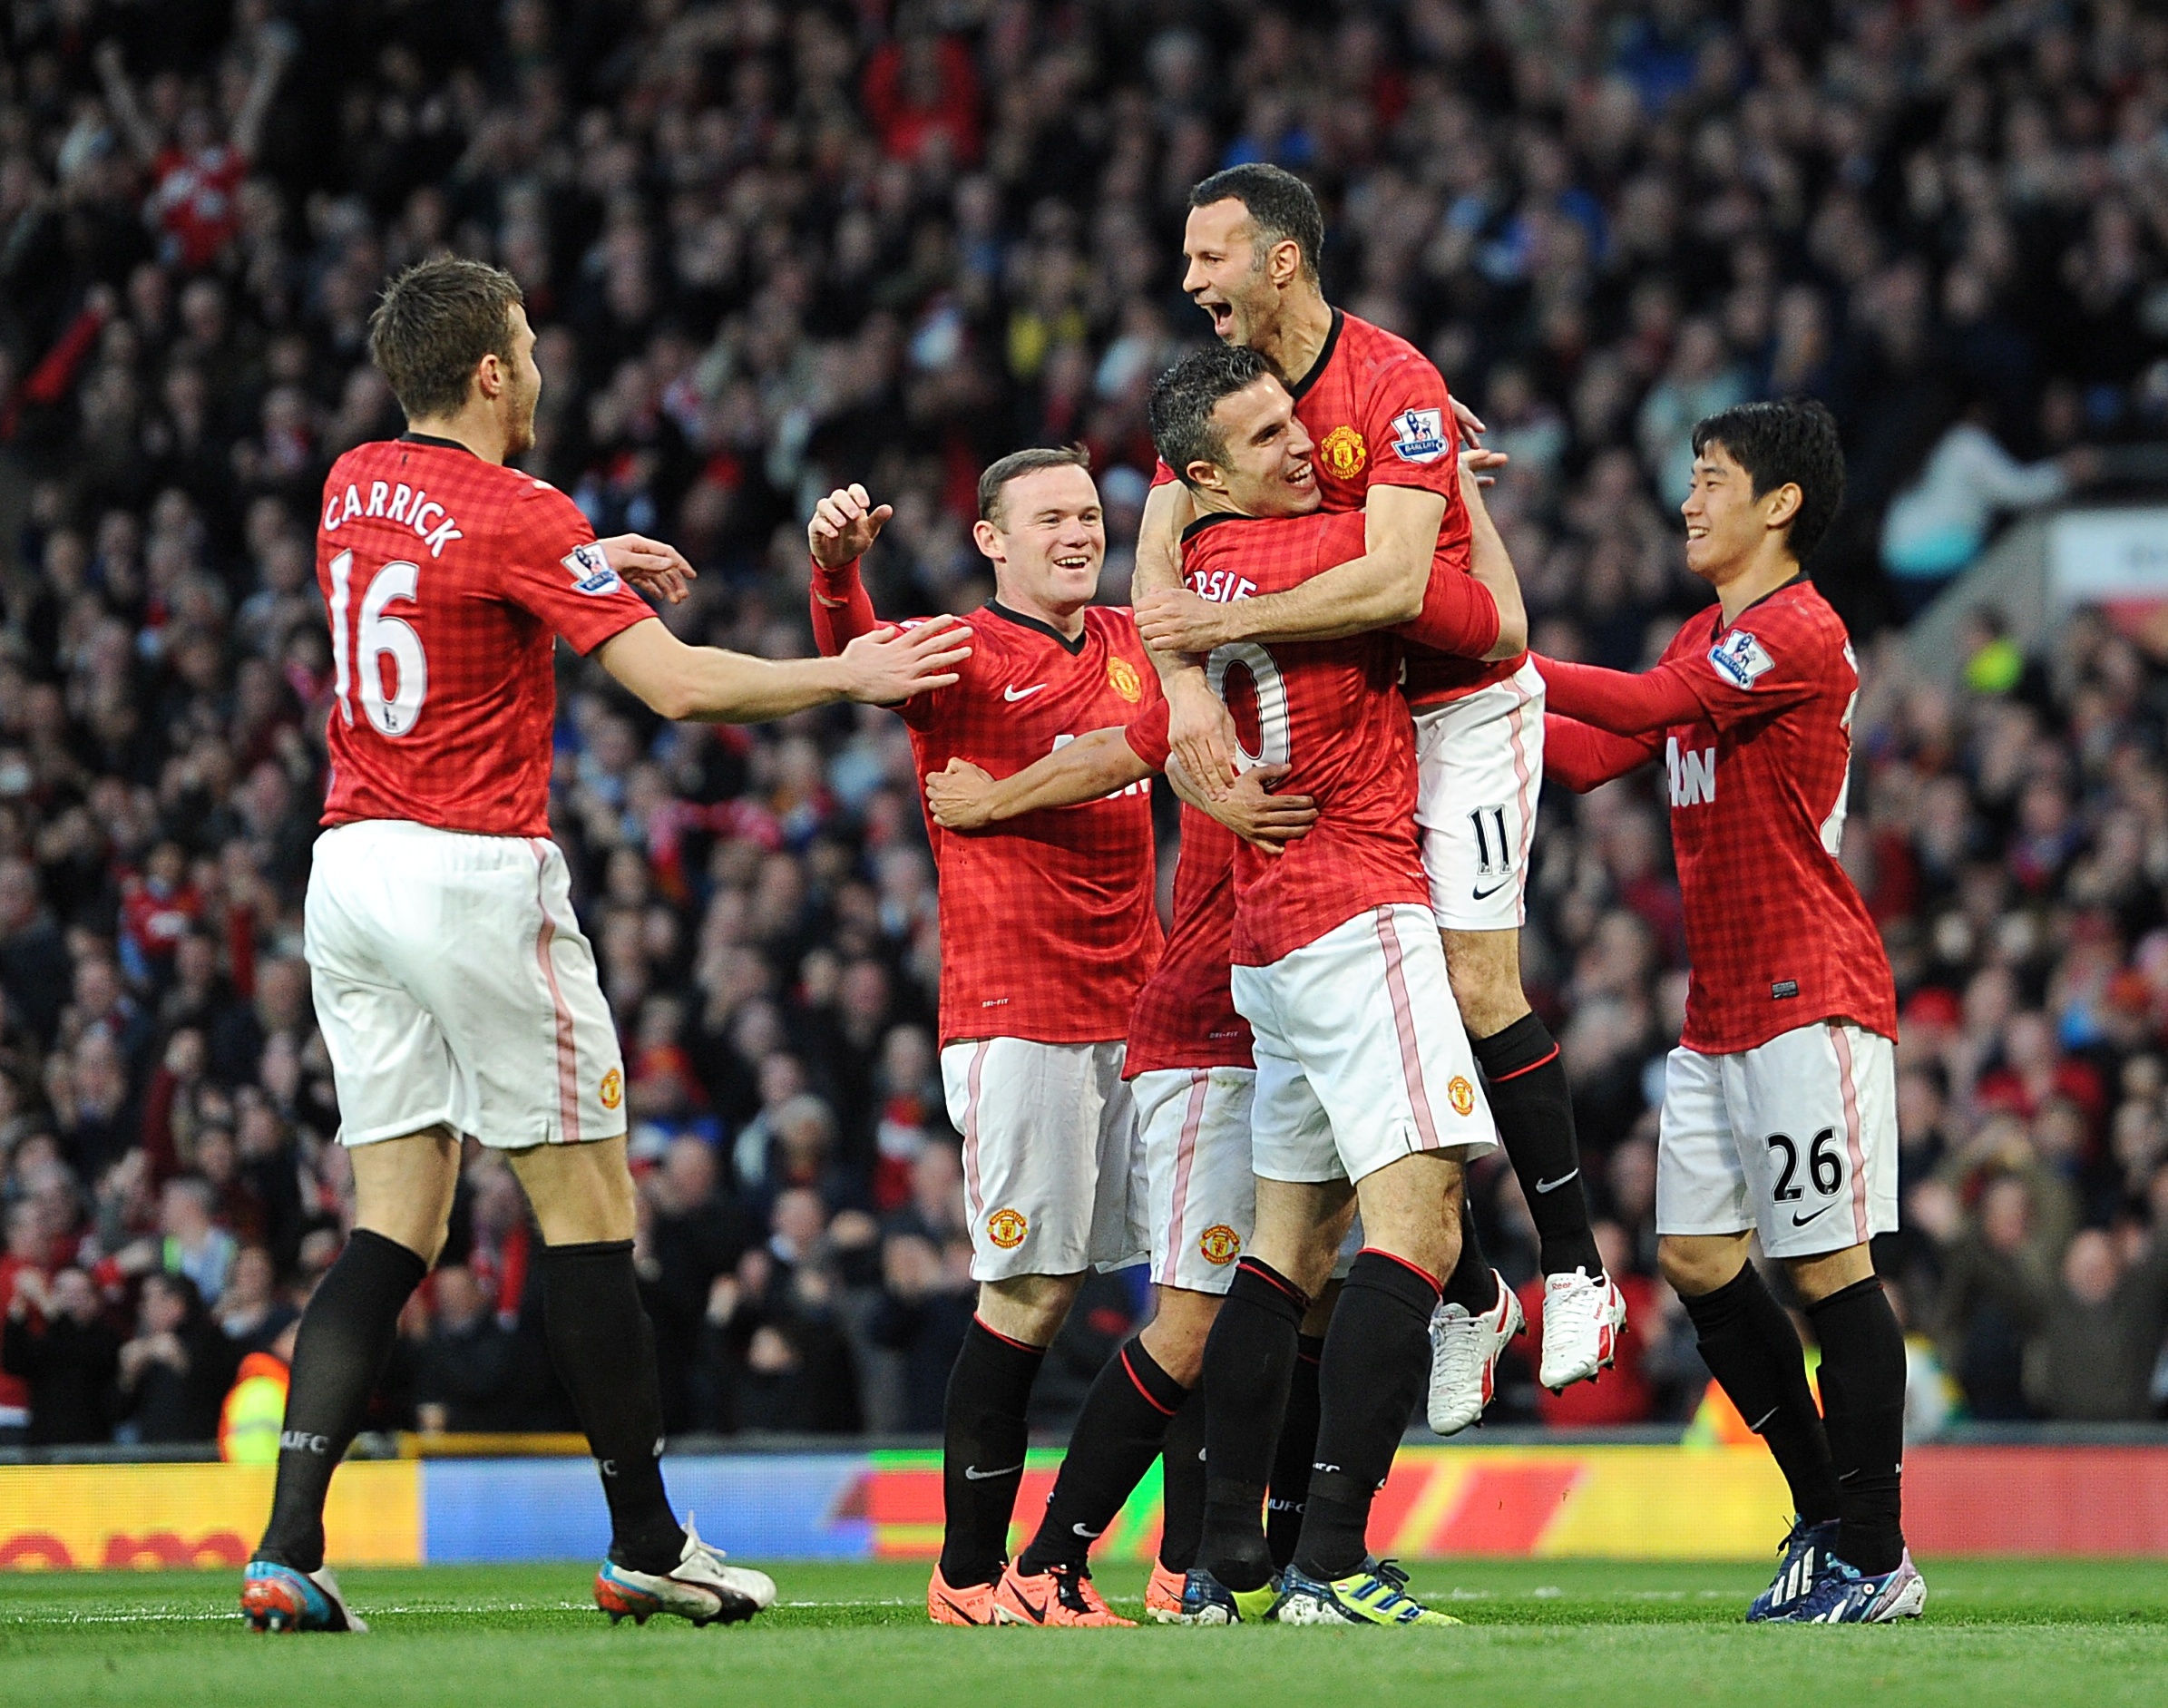 Manchester United celebrate